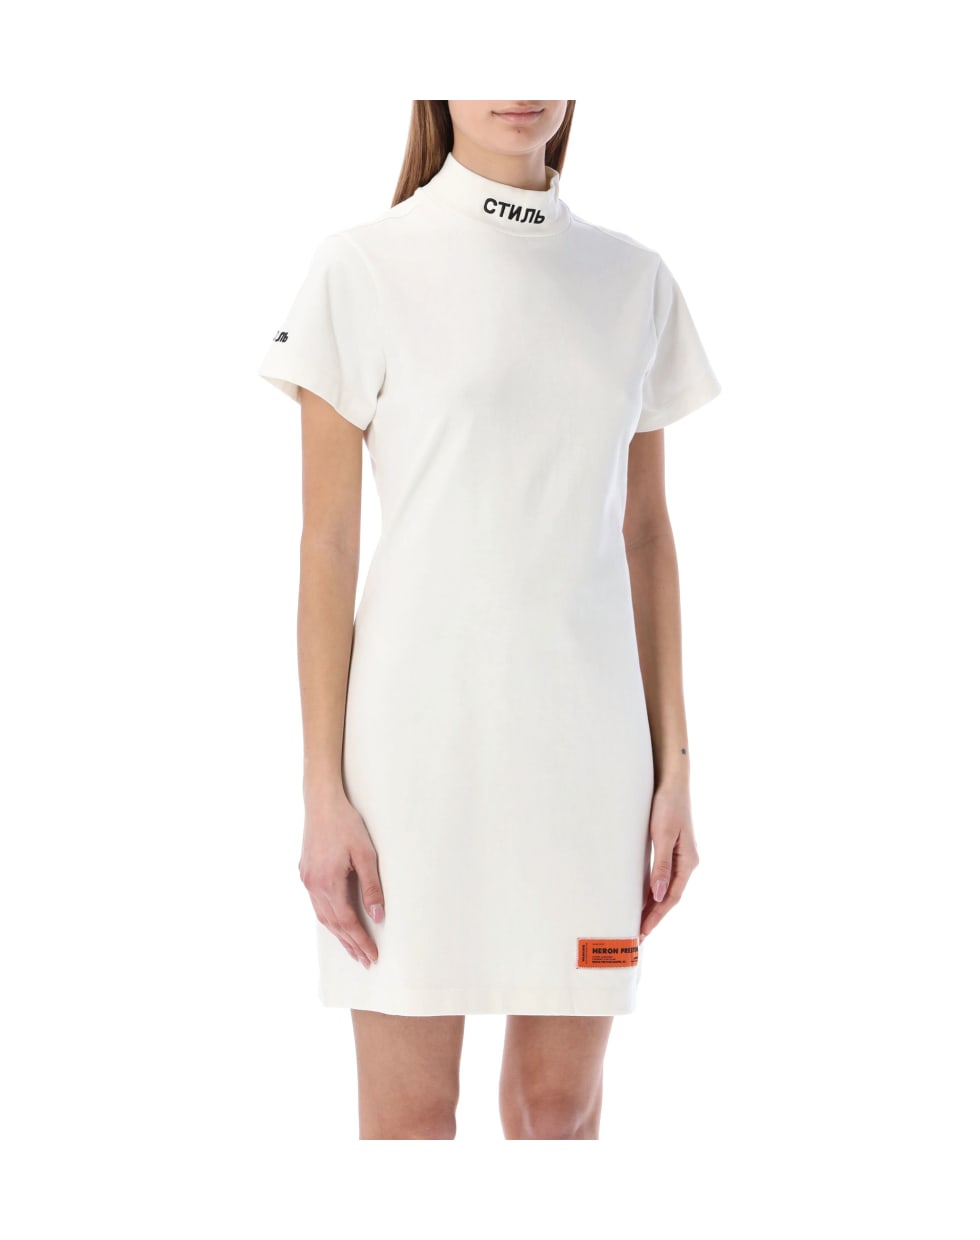 HERON PRESTON Ctnmb S/s Turtleneck Dress - WHITE